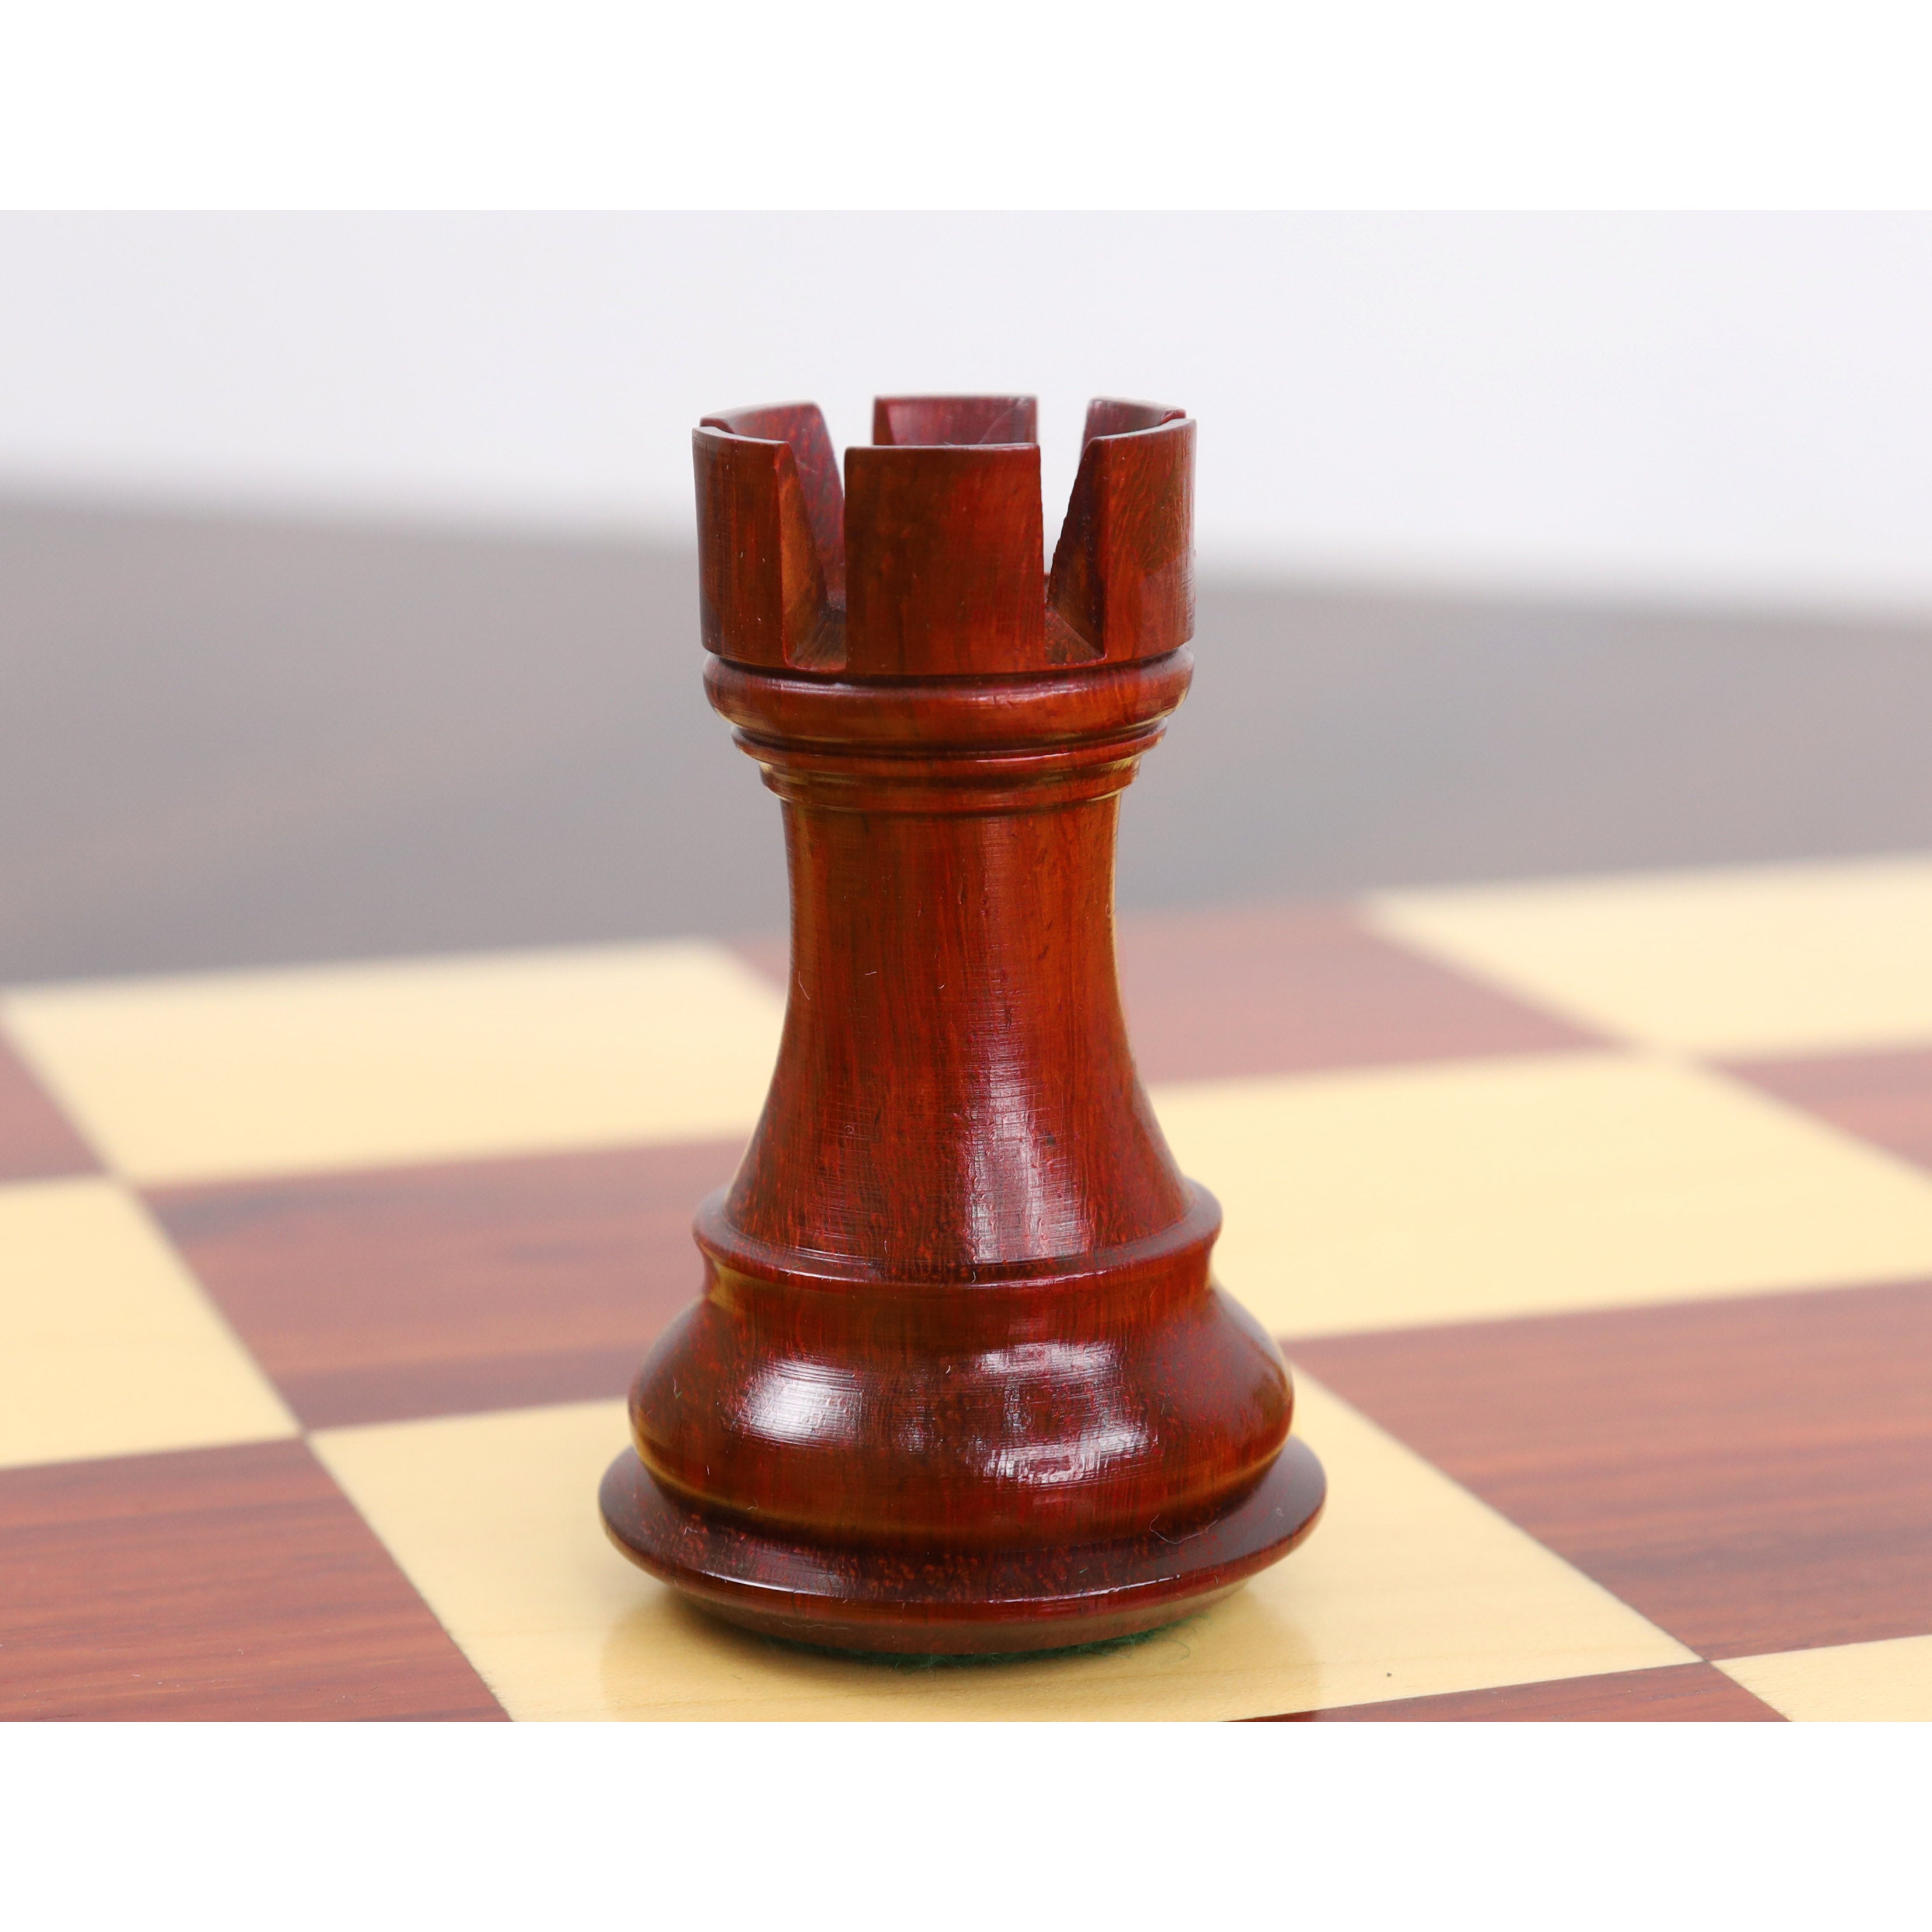 3.9" Bridle Staunton Luxury Chess Pieces Only set - Bud Rosewood & Boxwood